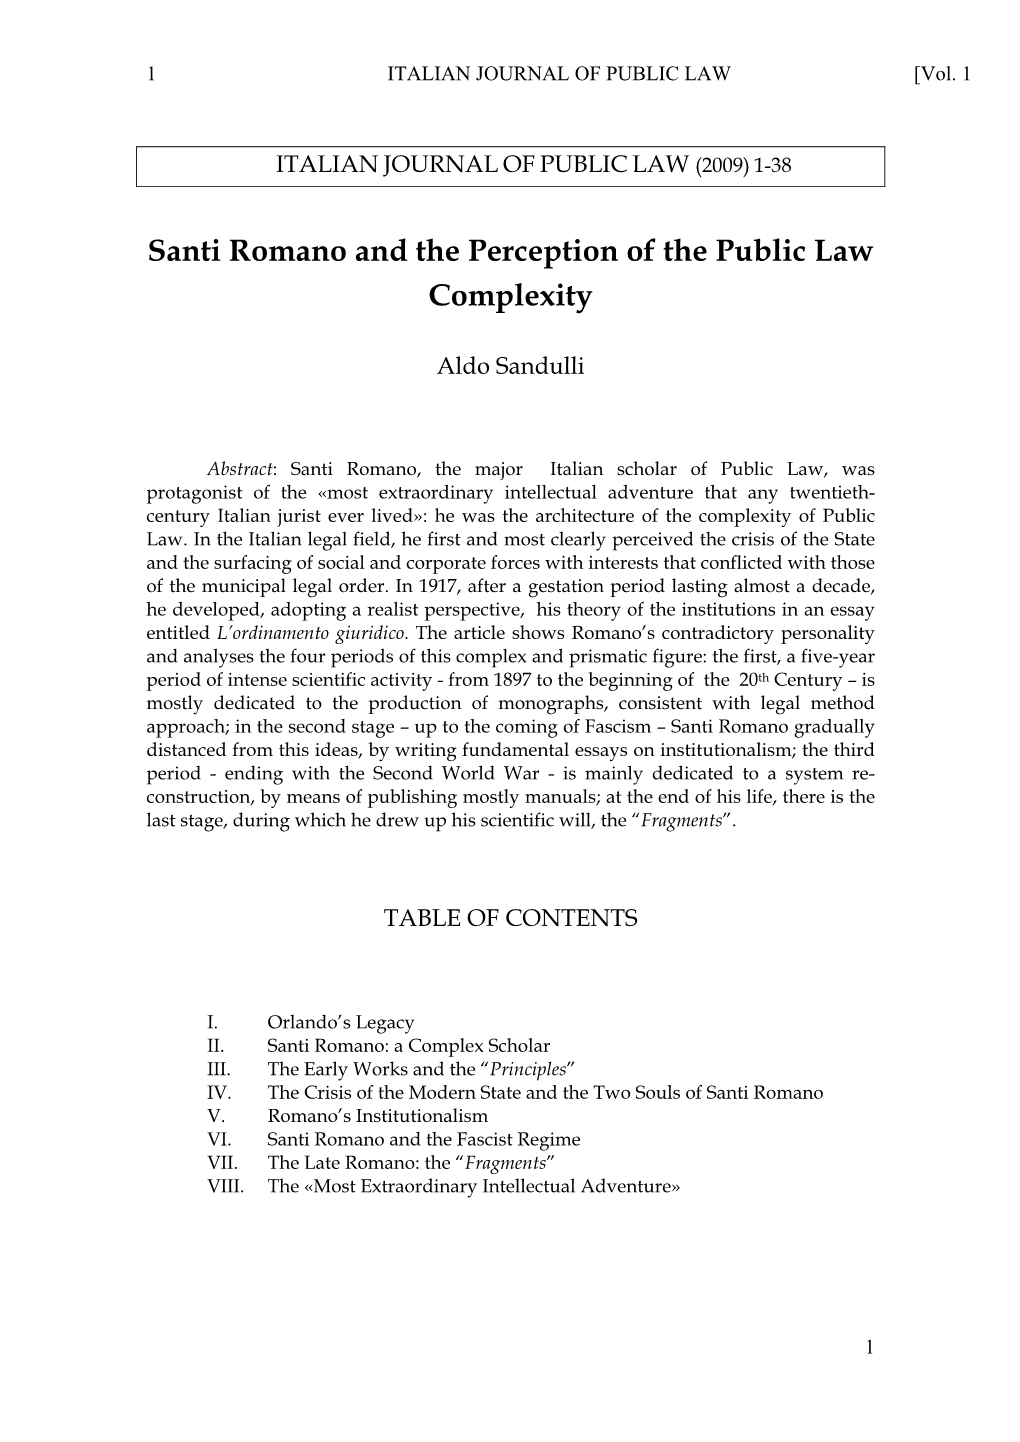 Santi Romano and the Perception of the Public Law Complexity